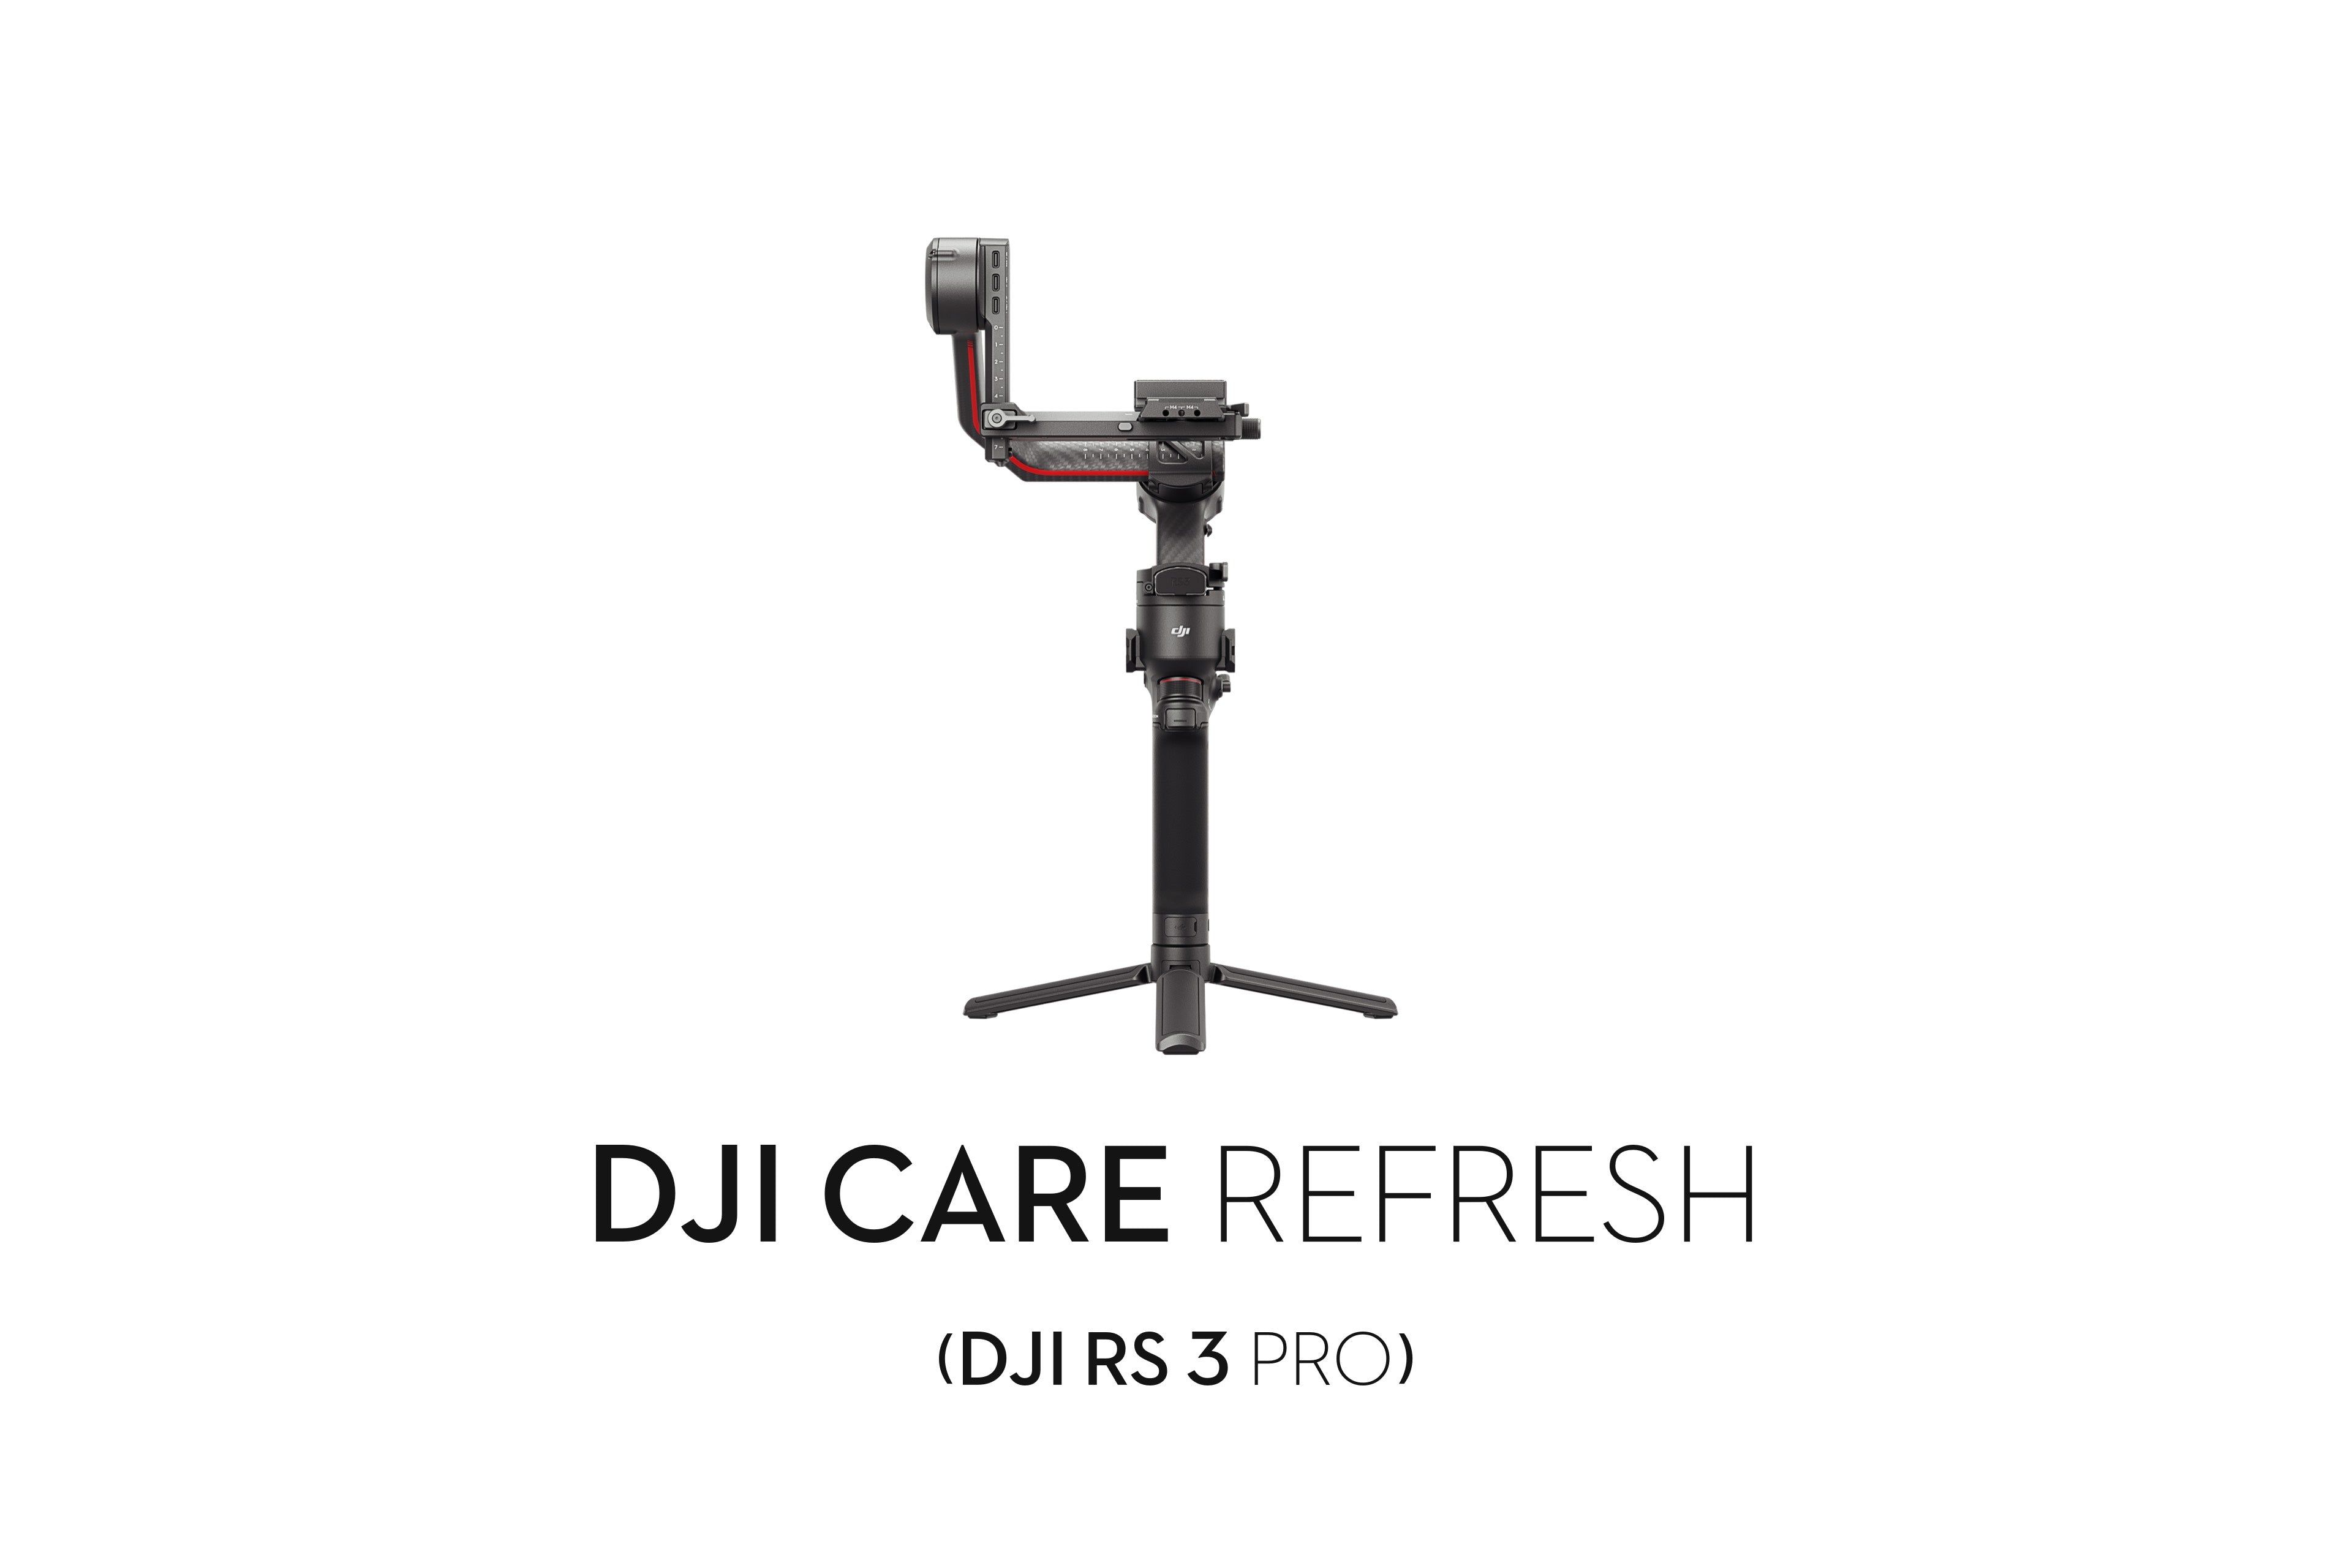 DJI Care Refresh 2-Year Plan (DJI RS 3)